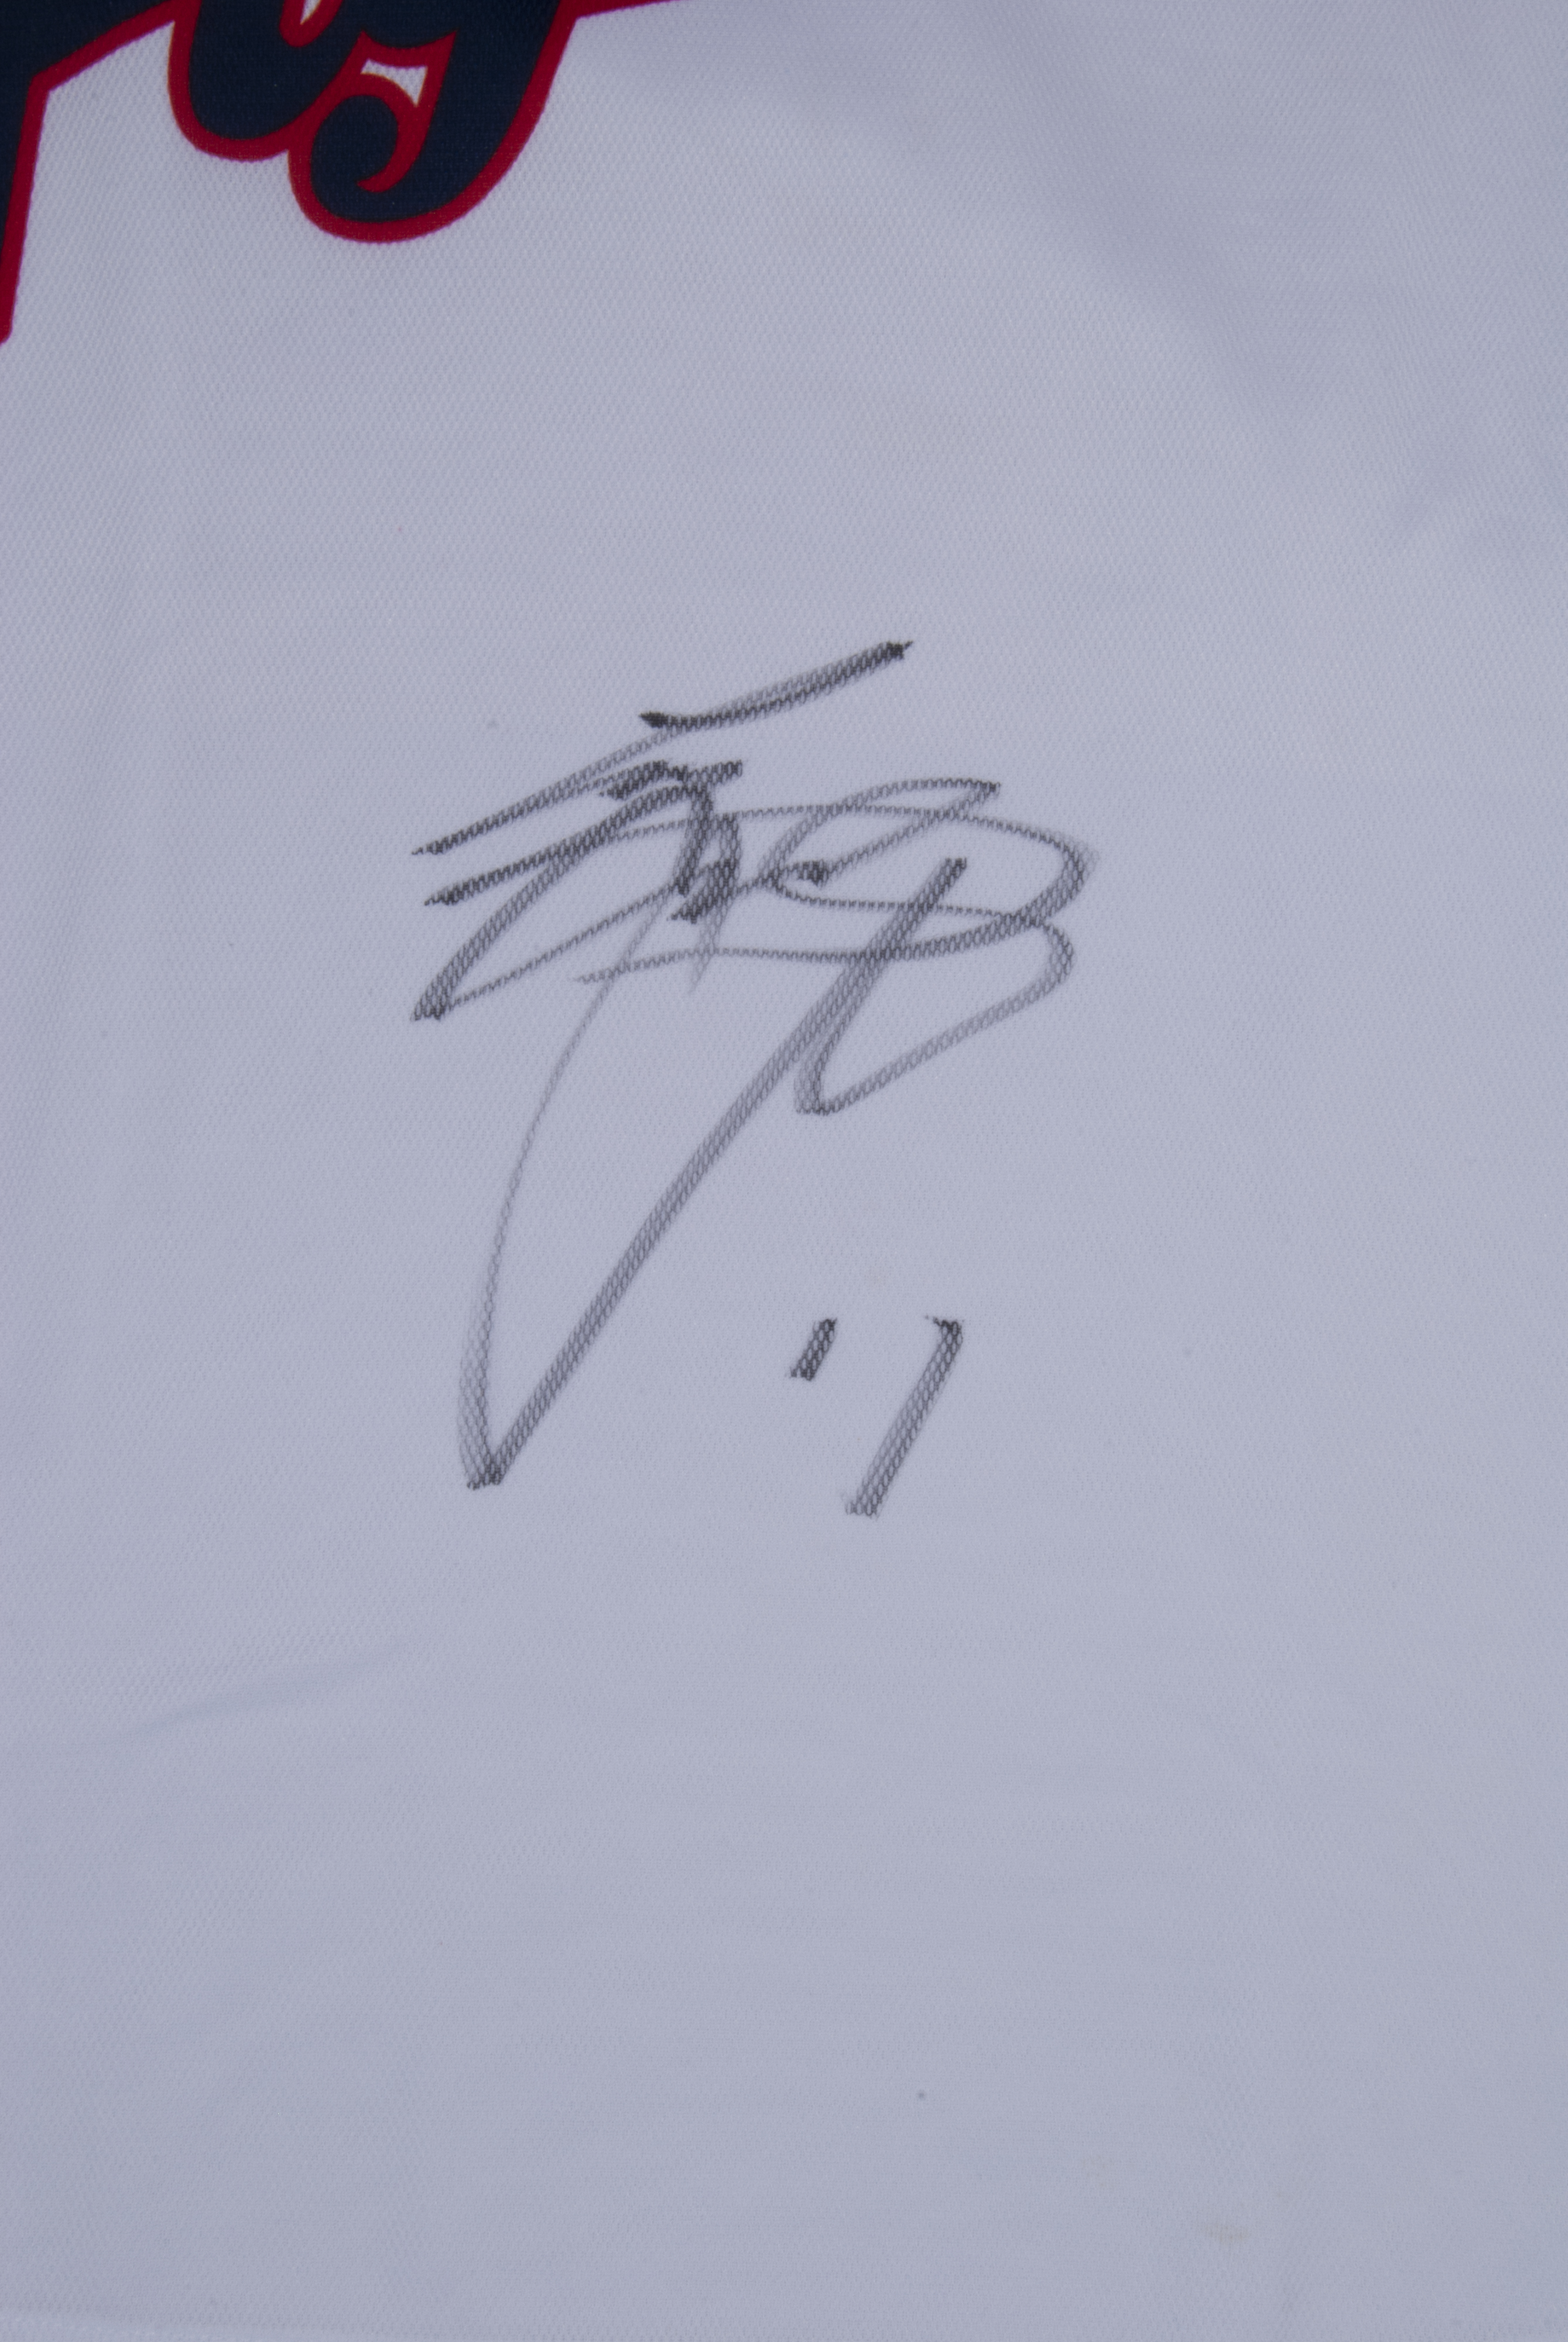 Retro Signed Autographed Nippon Ham Fighters Era Shohei Ohtani Jersey Yellow